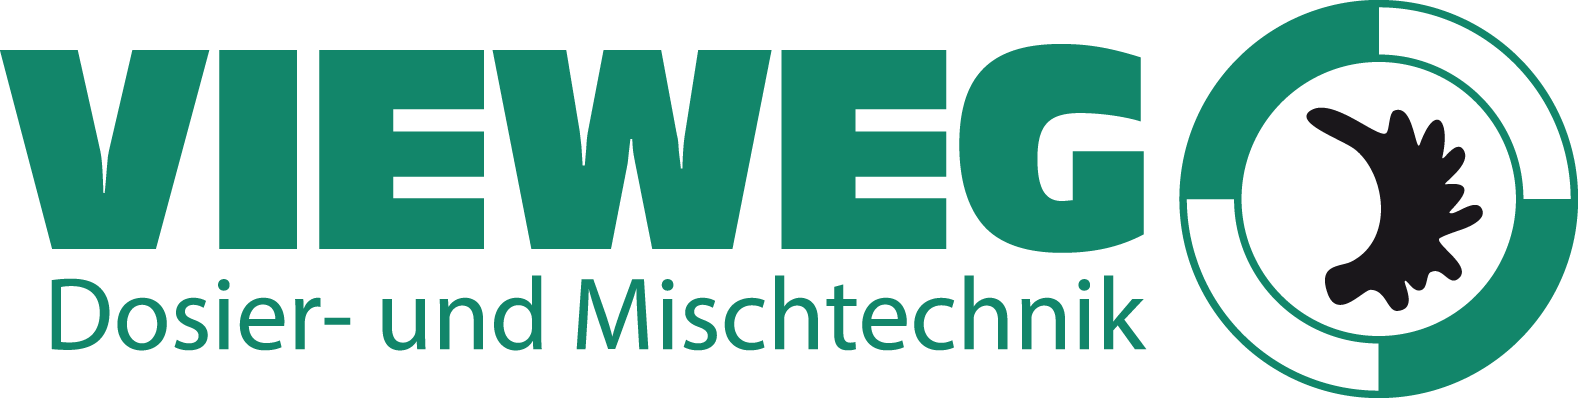 logo-vieweg-berg-macher